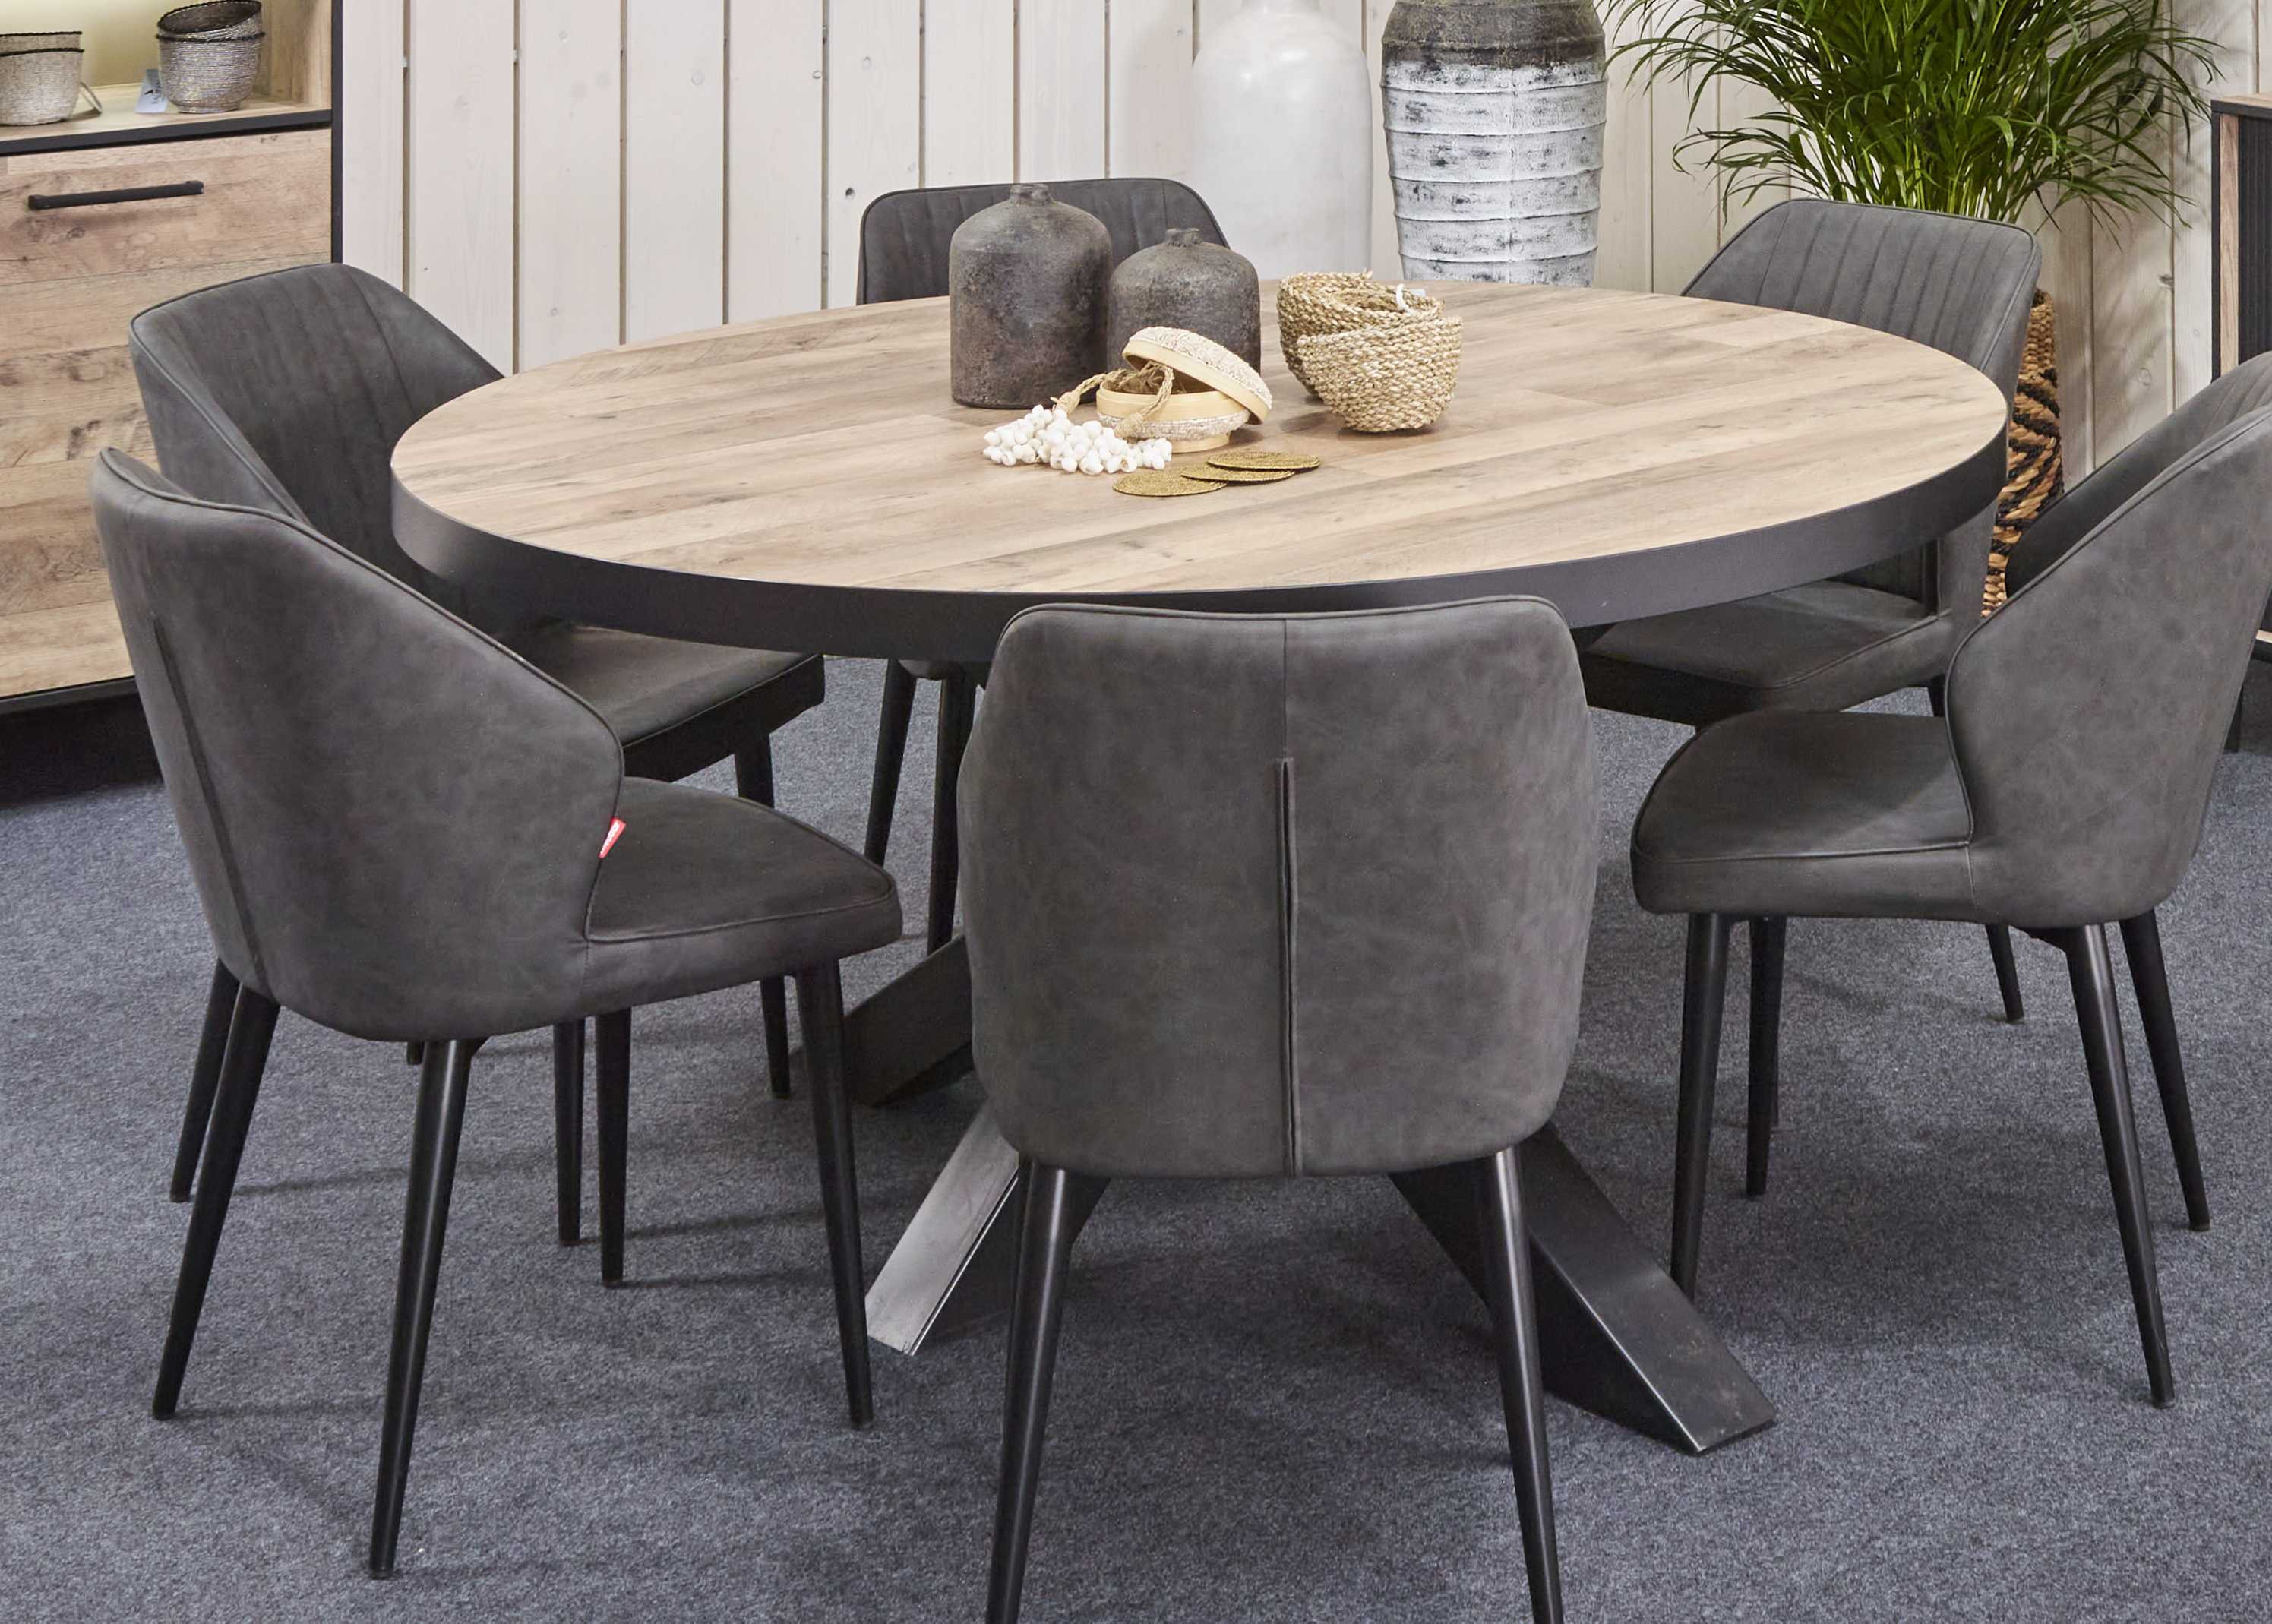 https://www.promo-meubles.com/2634/table-de-salle-a-manger-ronde-perugia.jpg